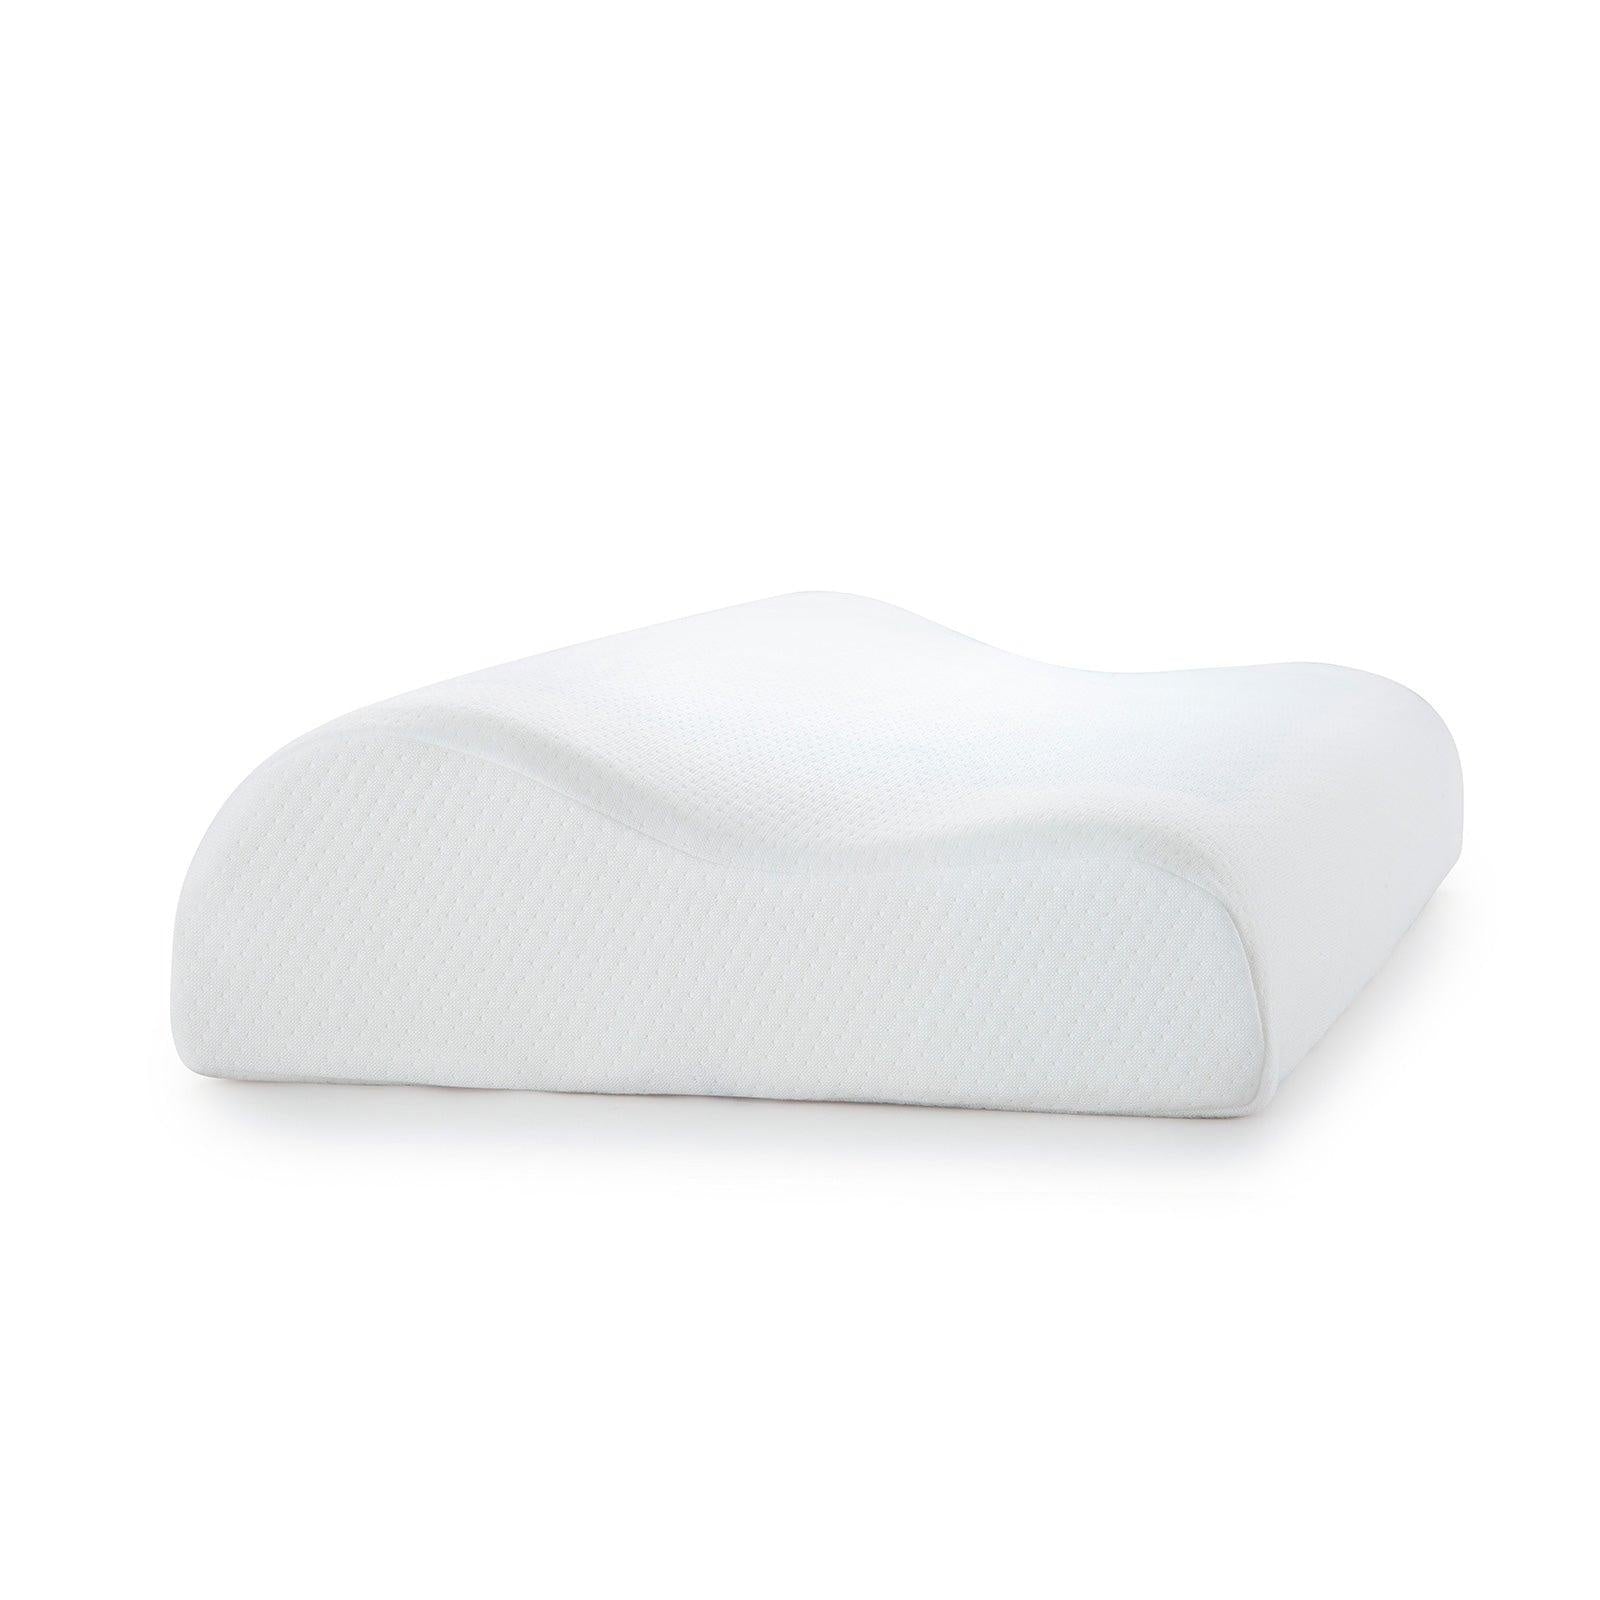 Royal Comfort Cooling Gel Contour High Density Memory Foam Pillow Single Pack 30 x 50 cm White, Blue Deals499